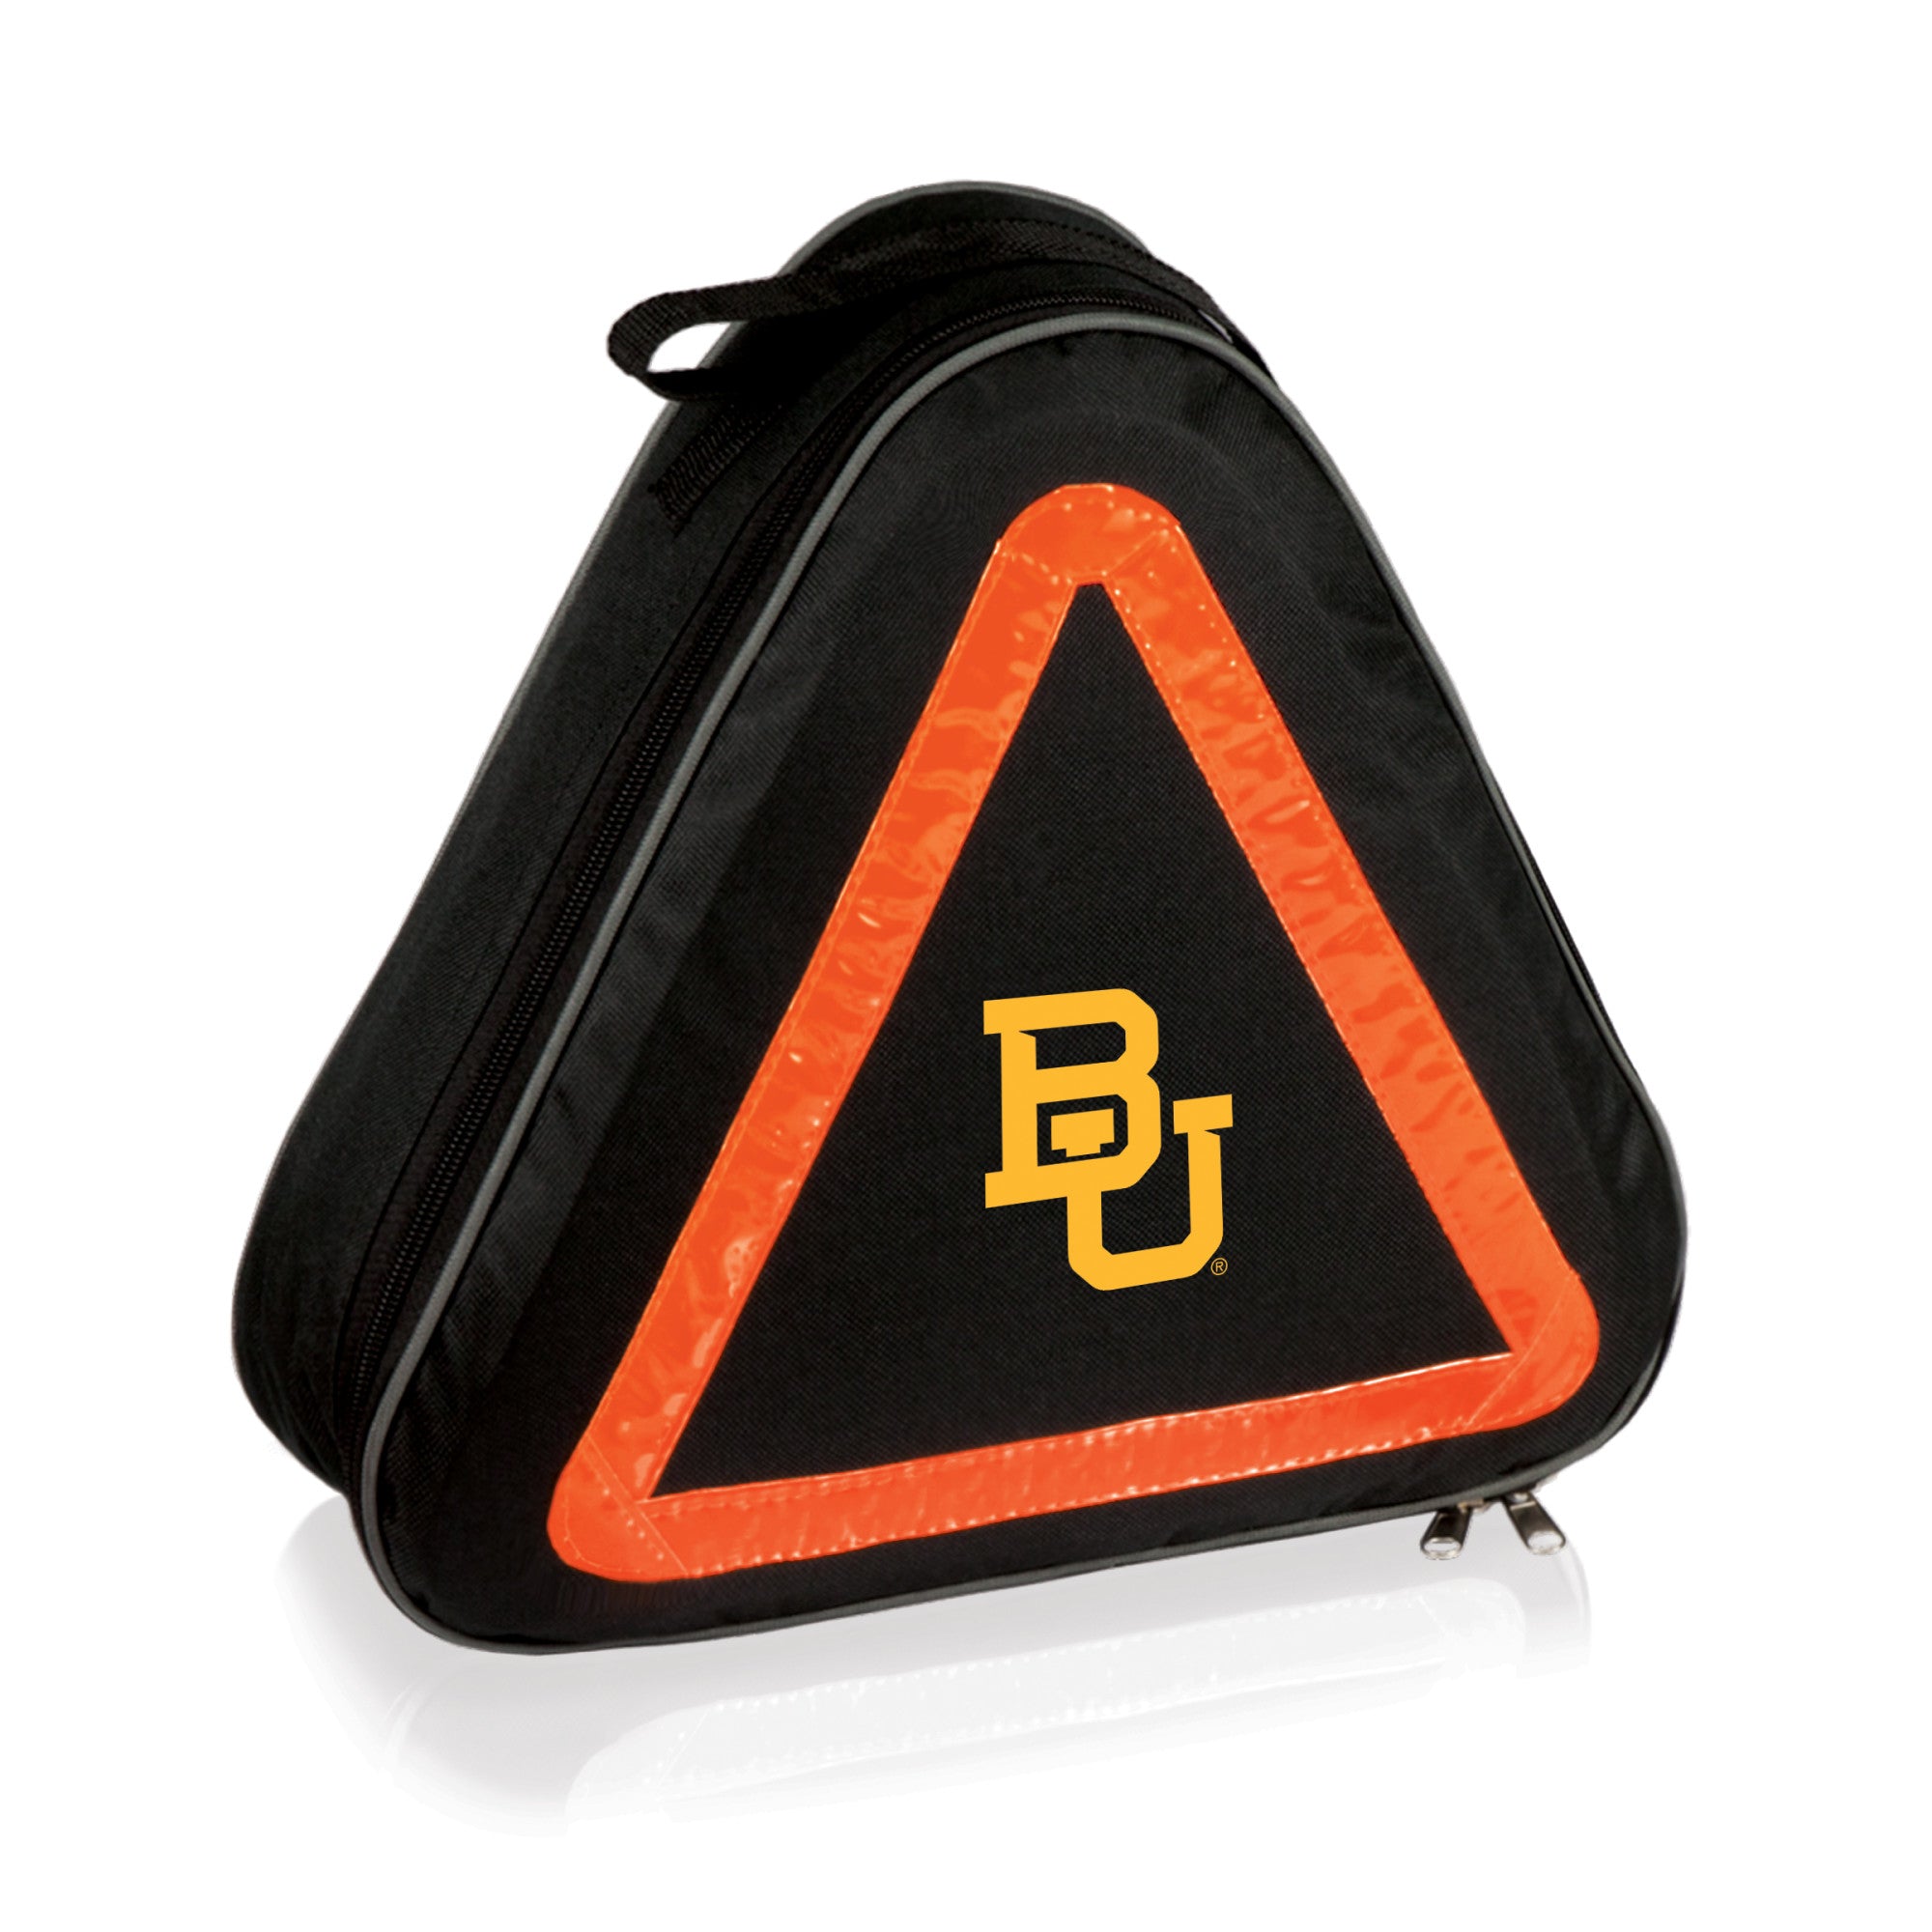 Baylor Bears - Roadside Emergency Car Kit